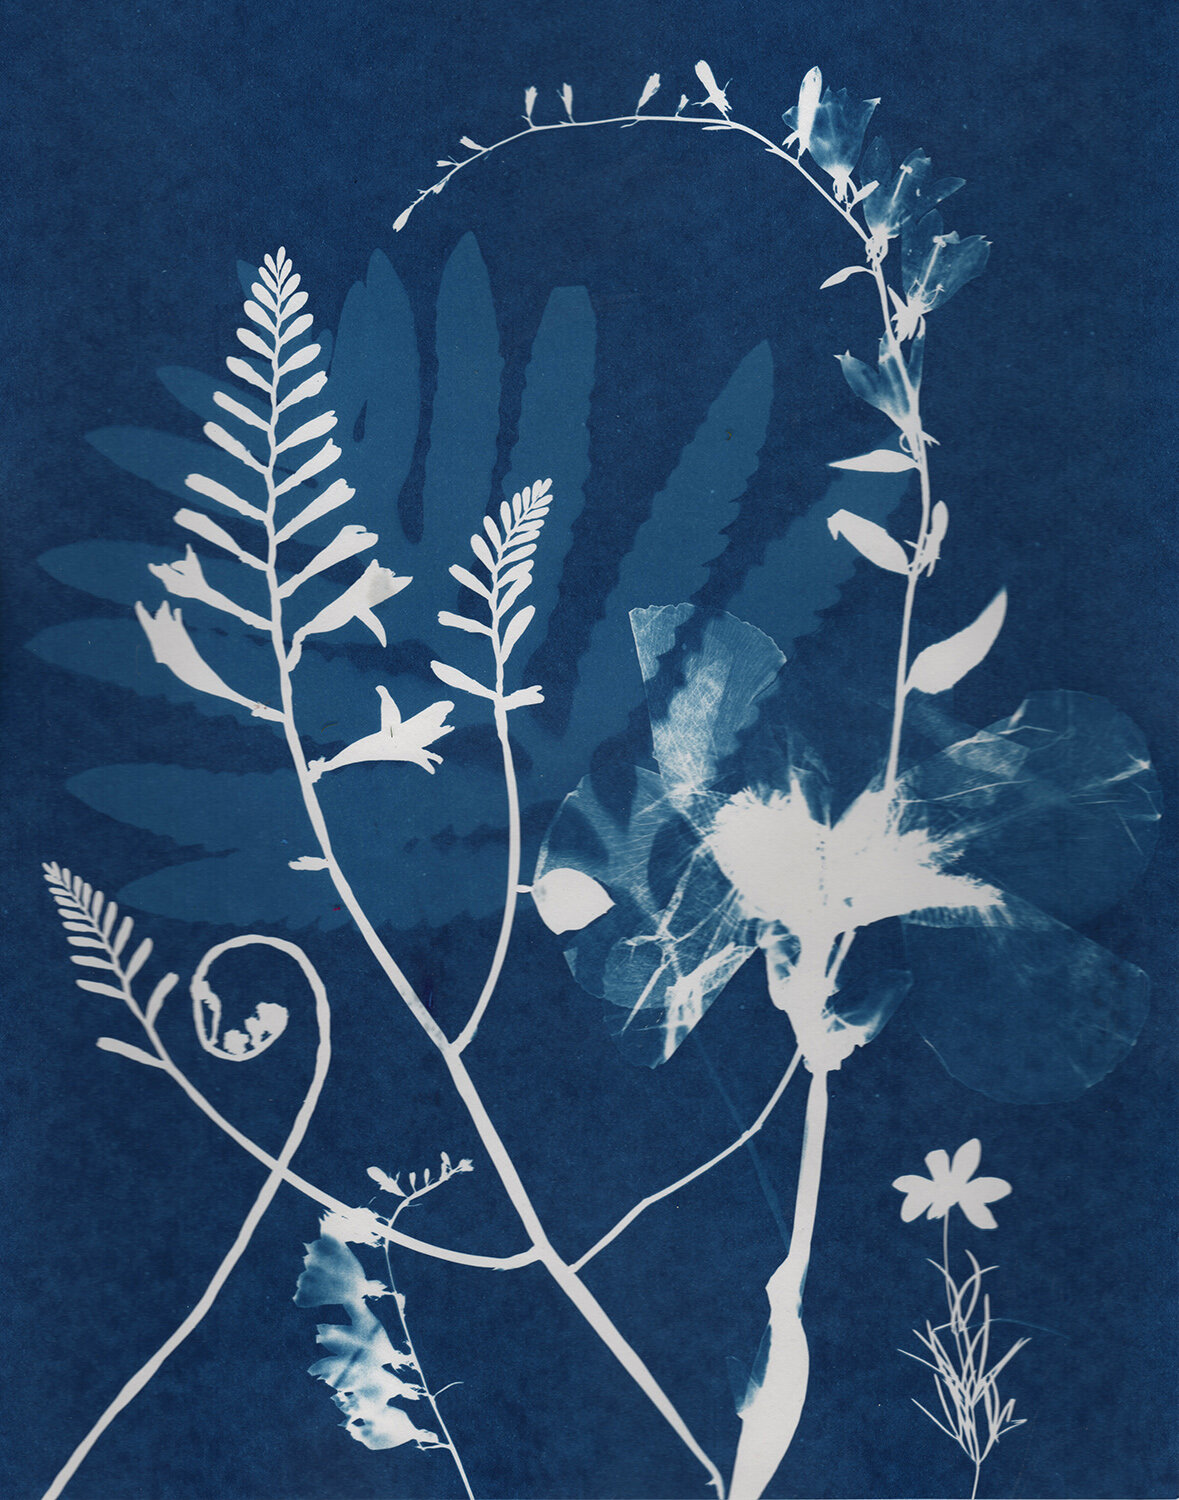  2020, 14" x 11" cyanotype on watercolor paper 